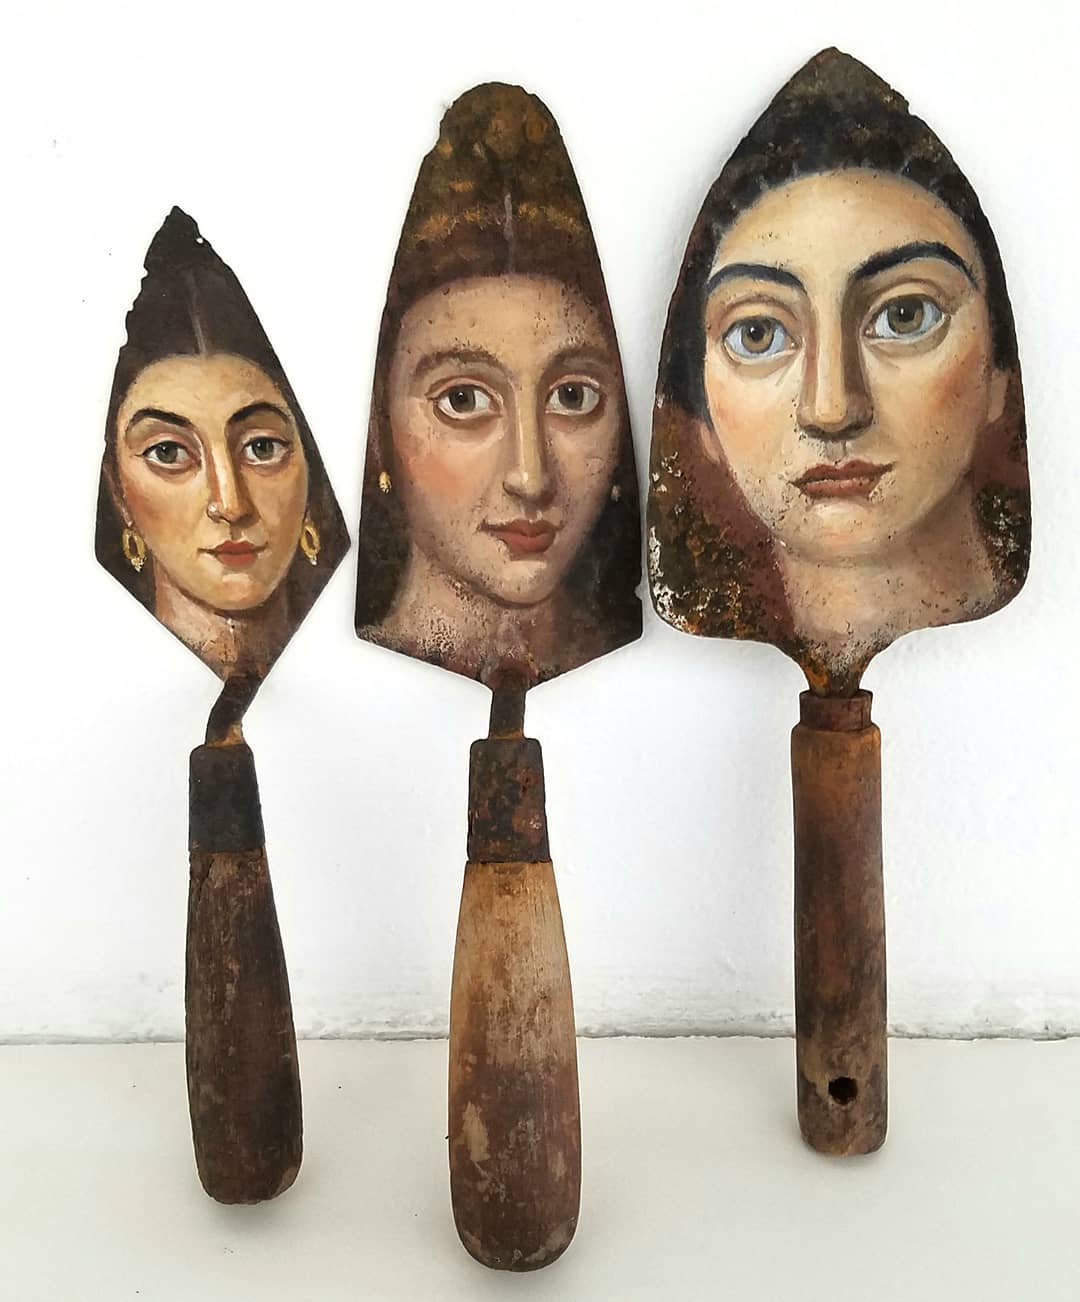 Alexandra Dillon retratos sobre utensilios encontrados palas